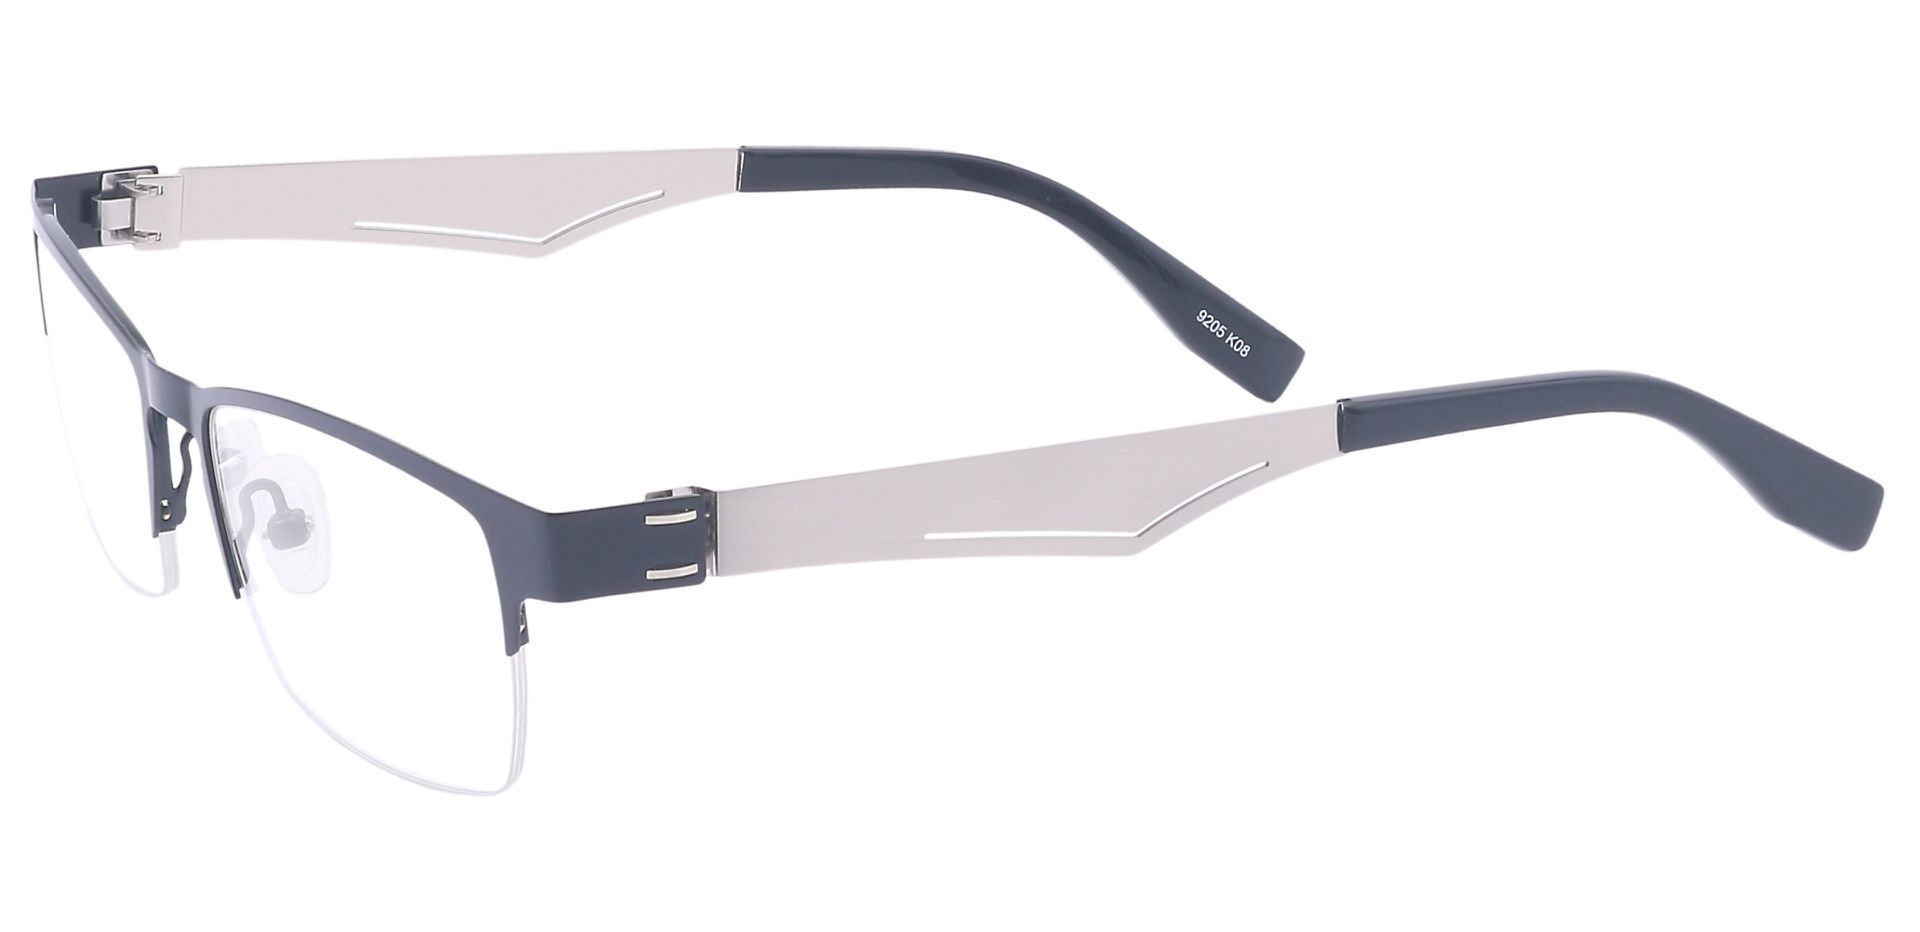 Stefani Rectangle Lined Bifocal Glasses - Black